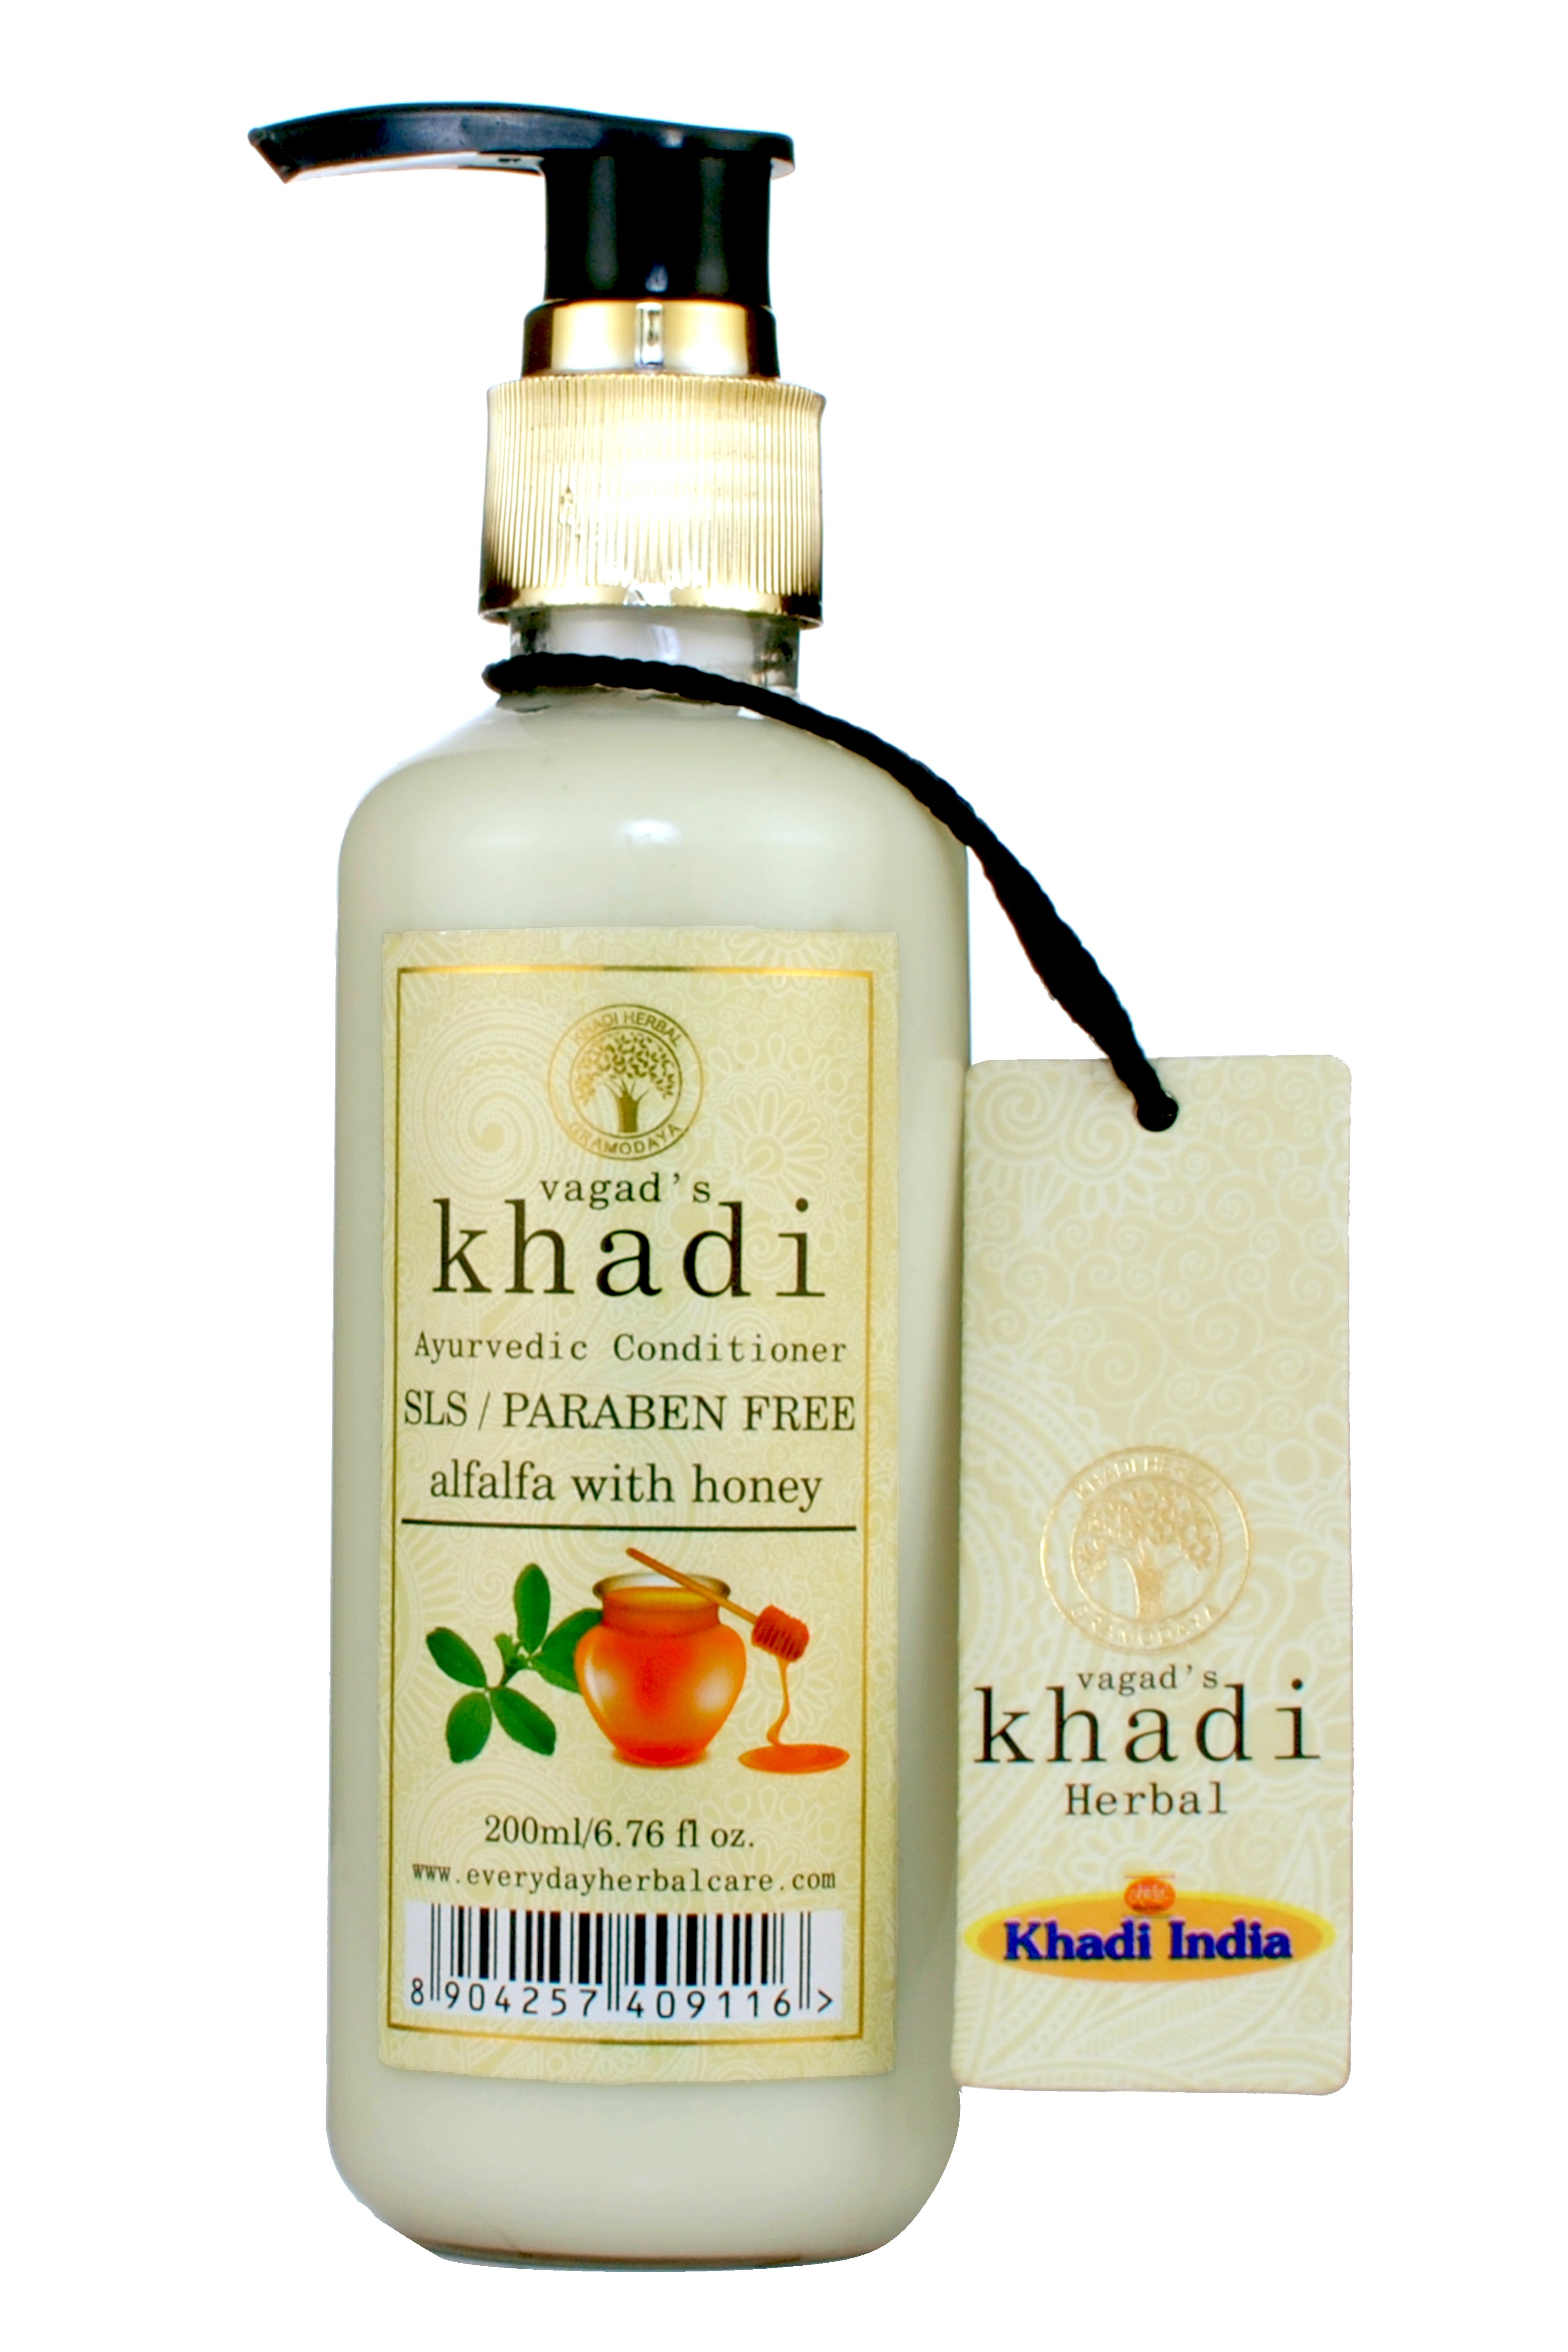 Buy Vagad's Khadi Alfa Alfa With Honey S.L.S And Paraben Free Conditioner at Best Price Online